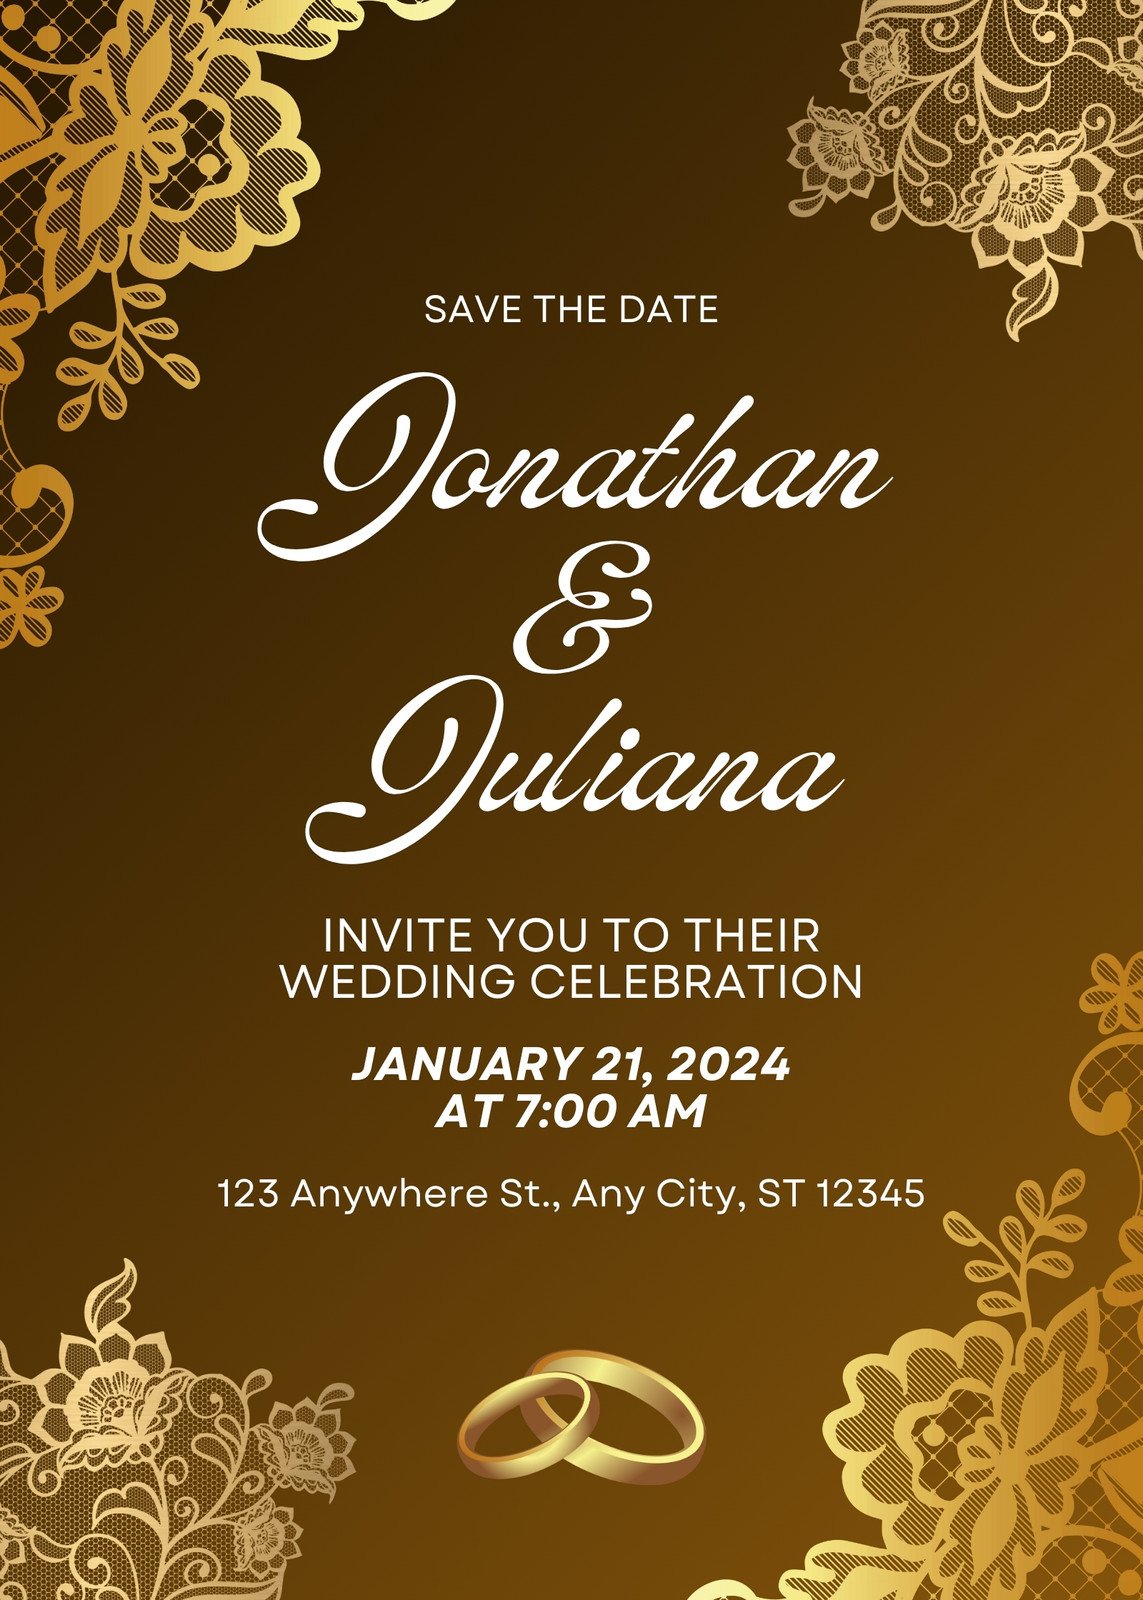 https://marketplace.canva.com/EAFzLIZuwR8/1/0/1143w/canva-gold-gradient-elegant-wedding-invitation-card-obRSpnWS4f0.jpg